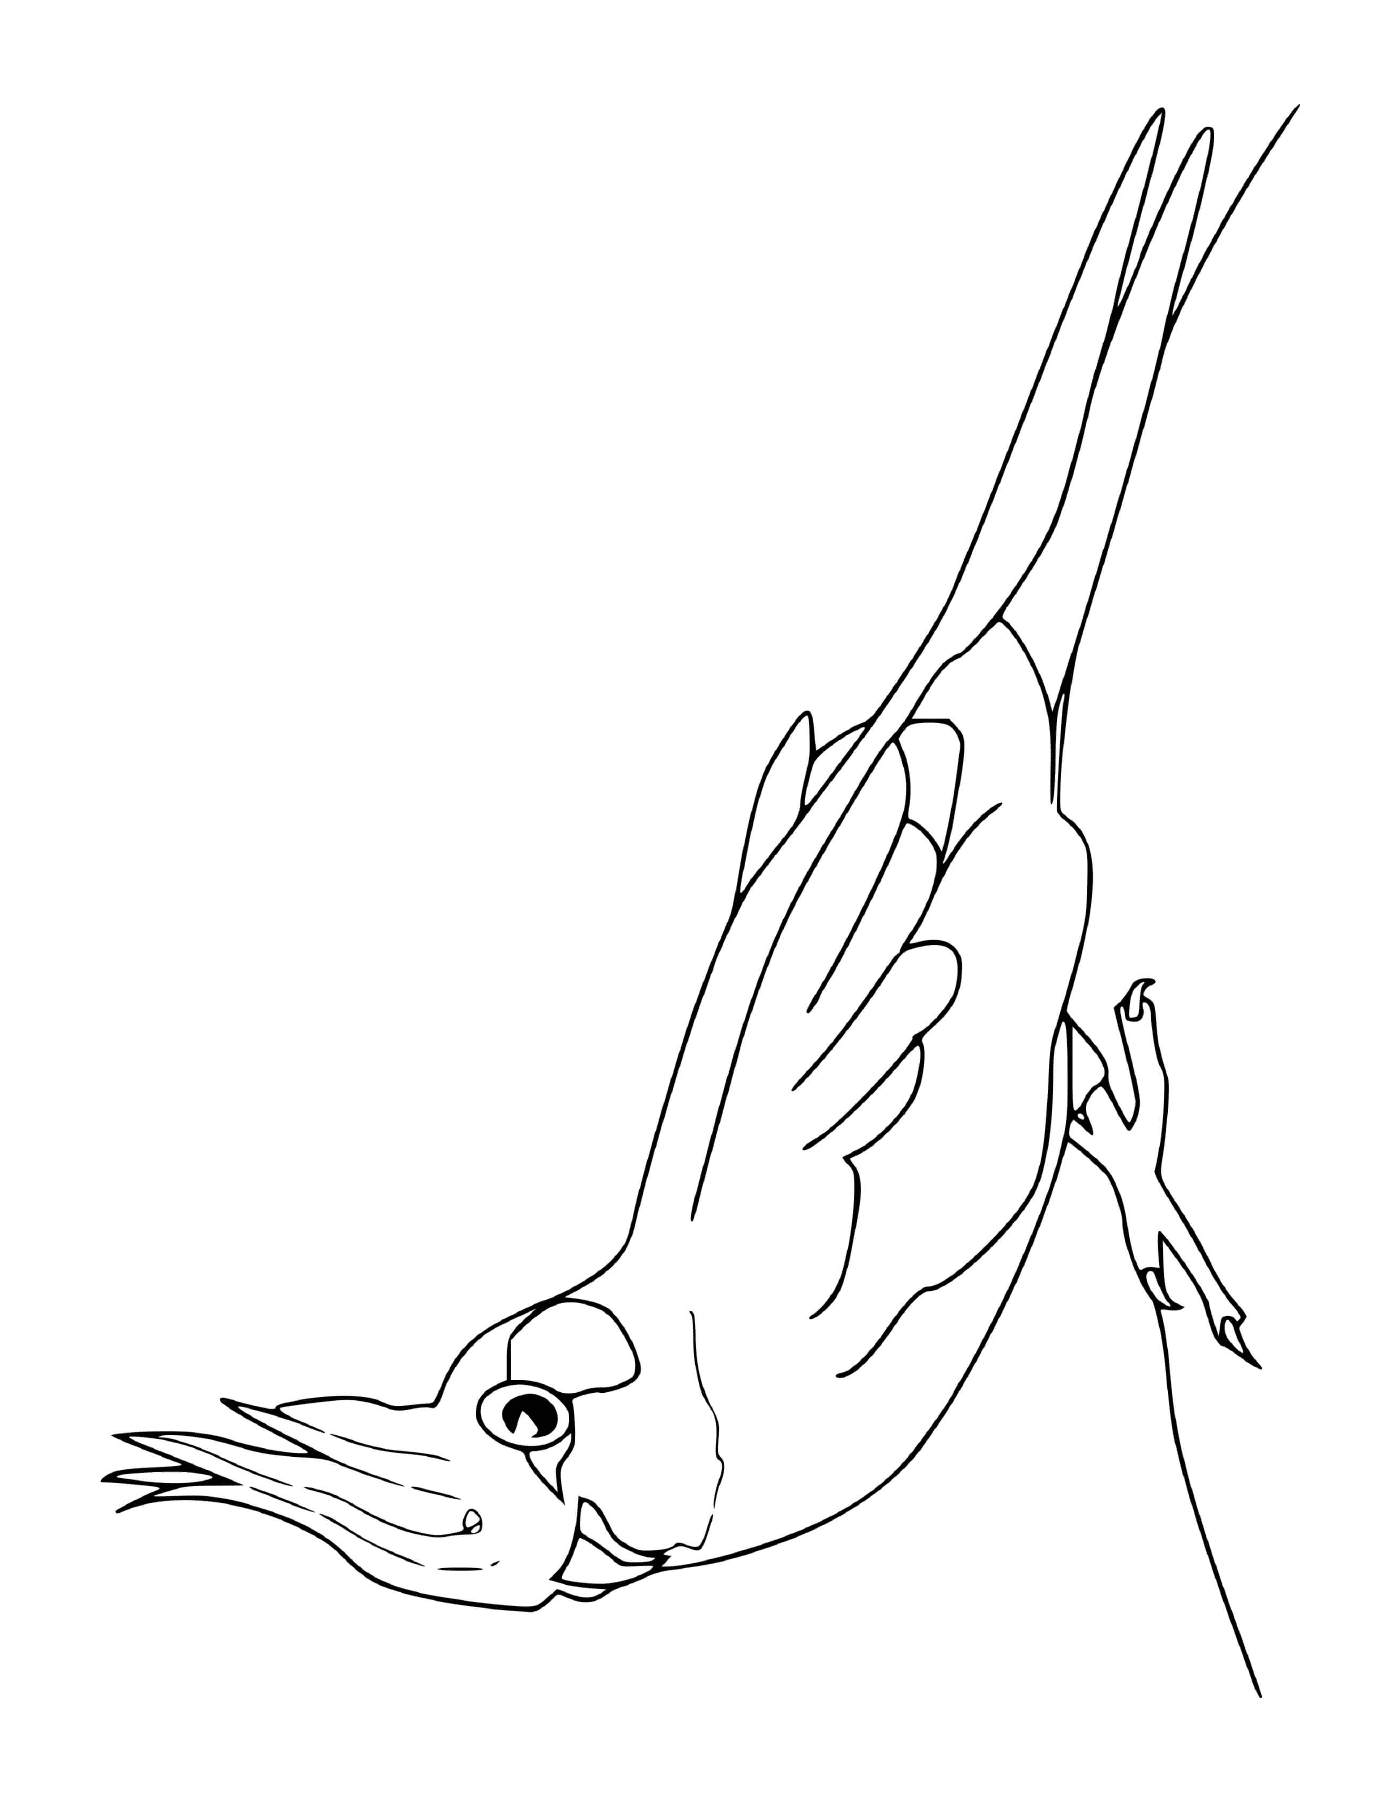  pássaro estendendo suas asas 